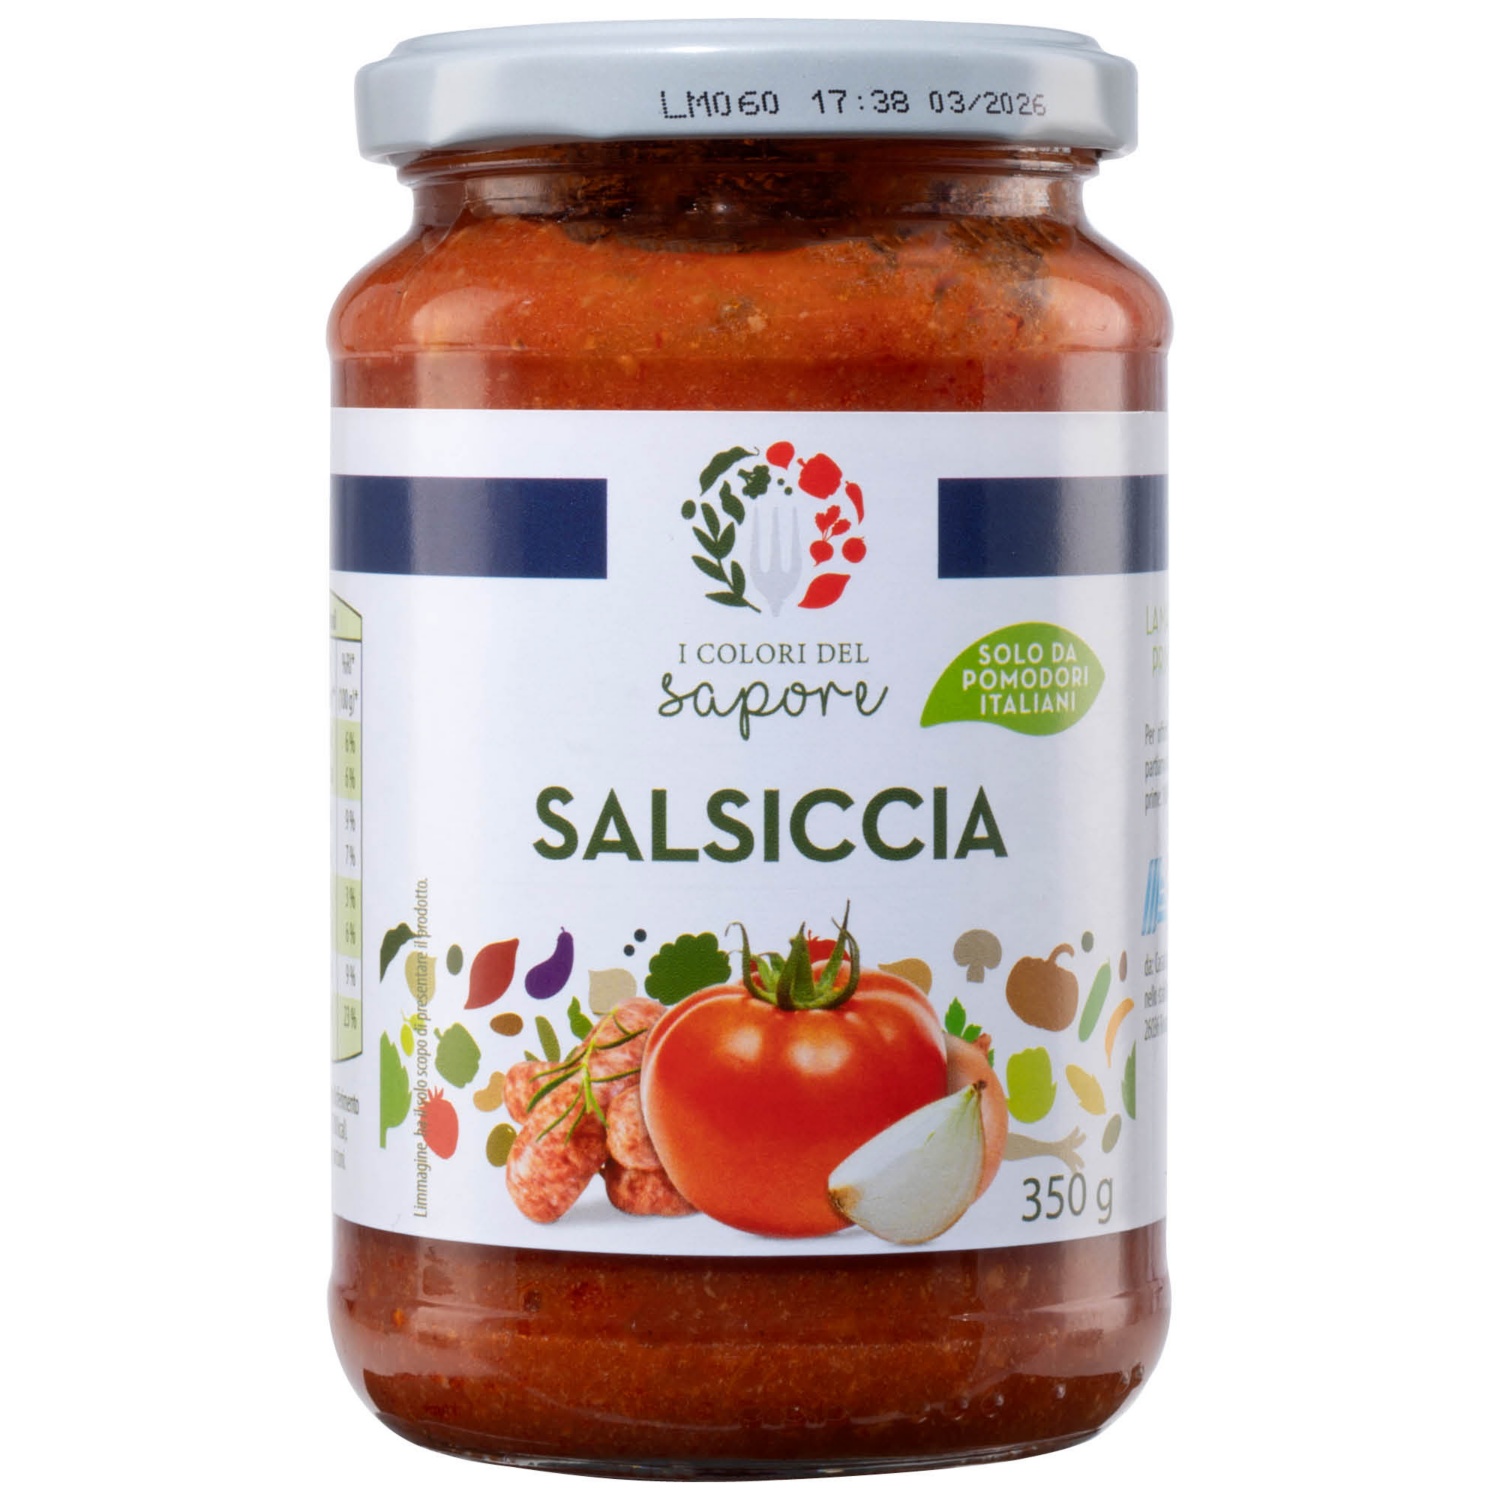 Tomatensauce mit Salsiccia/Ri, Salsiccia